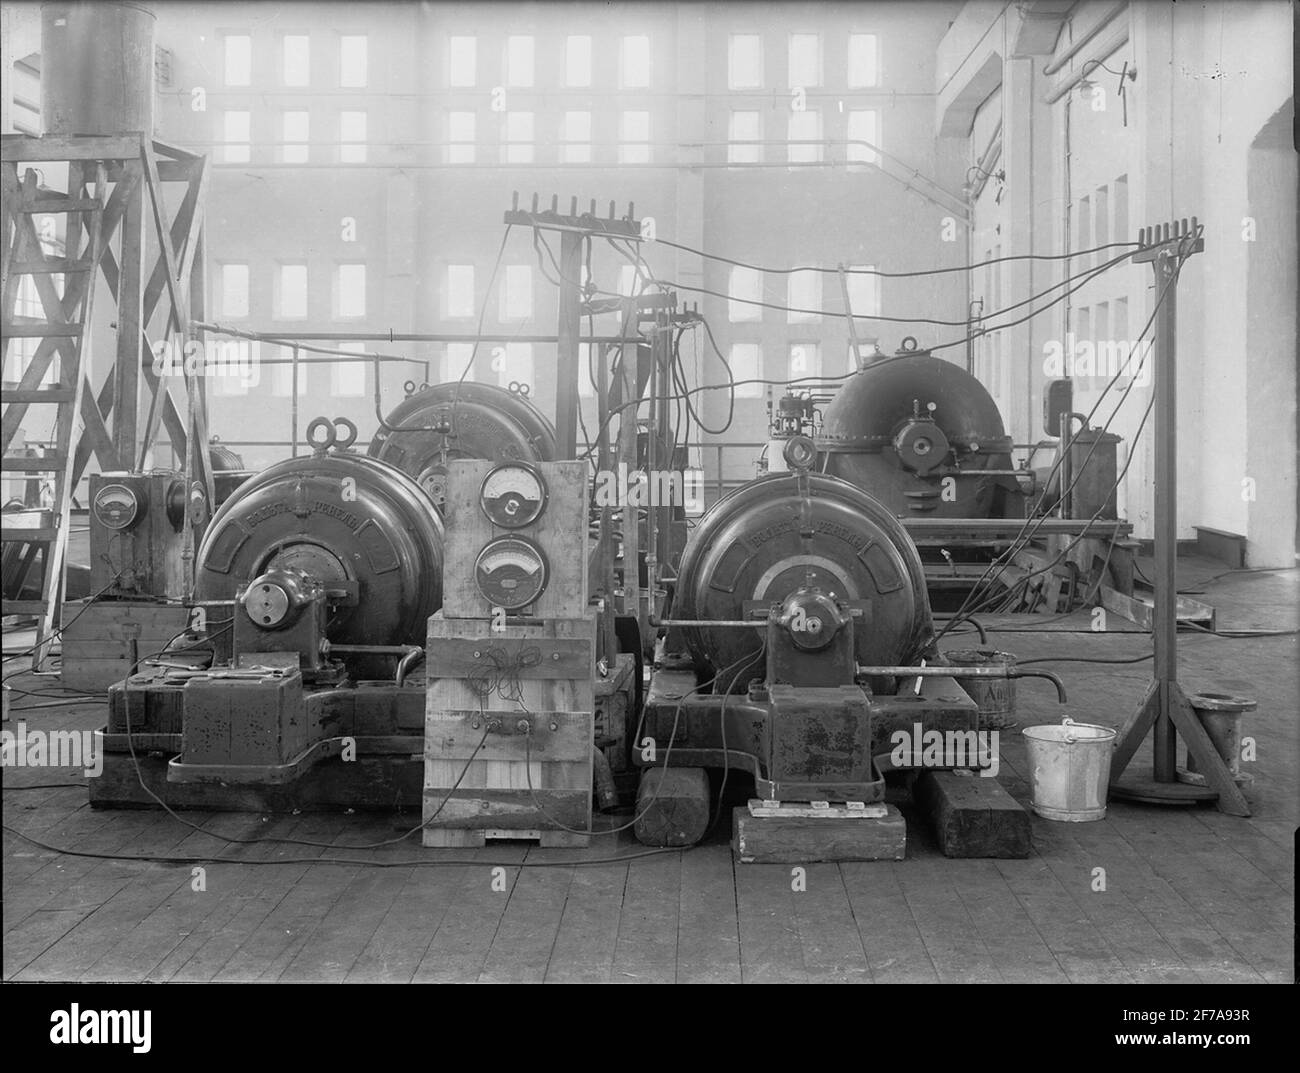 Generators Black and White Stock Photos & Images - Alamy